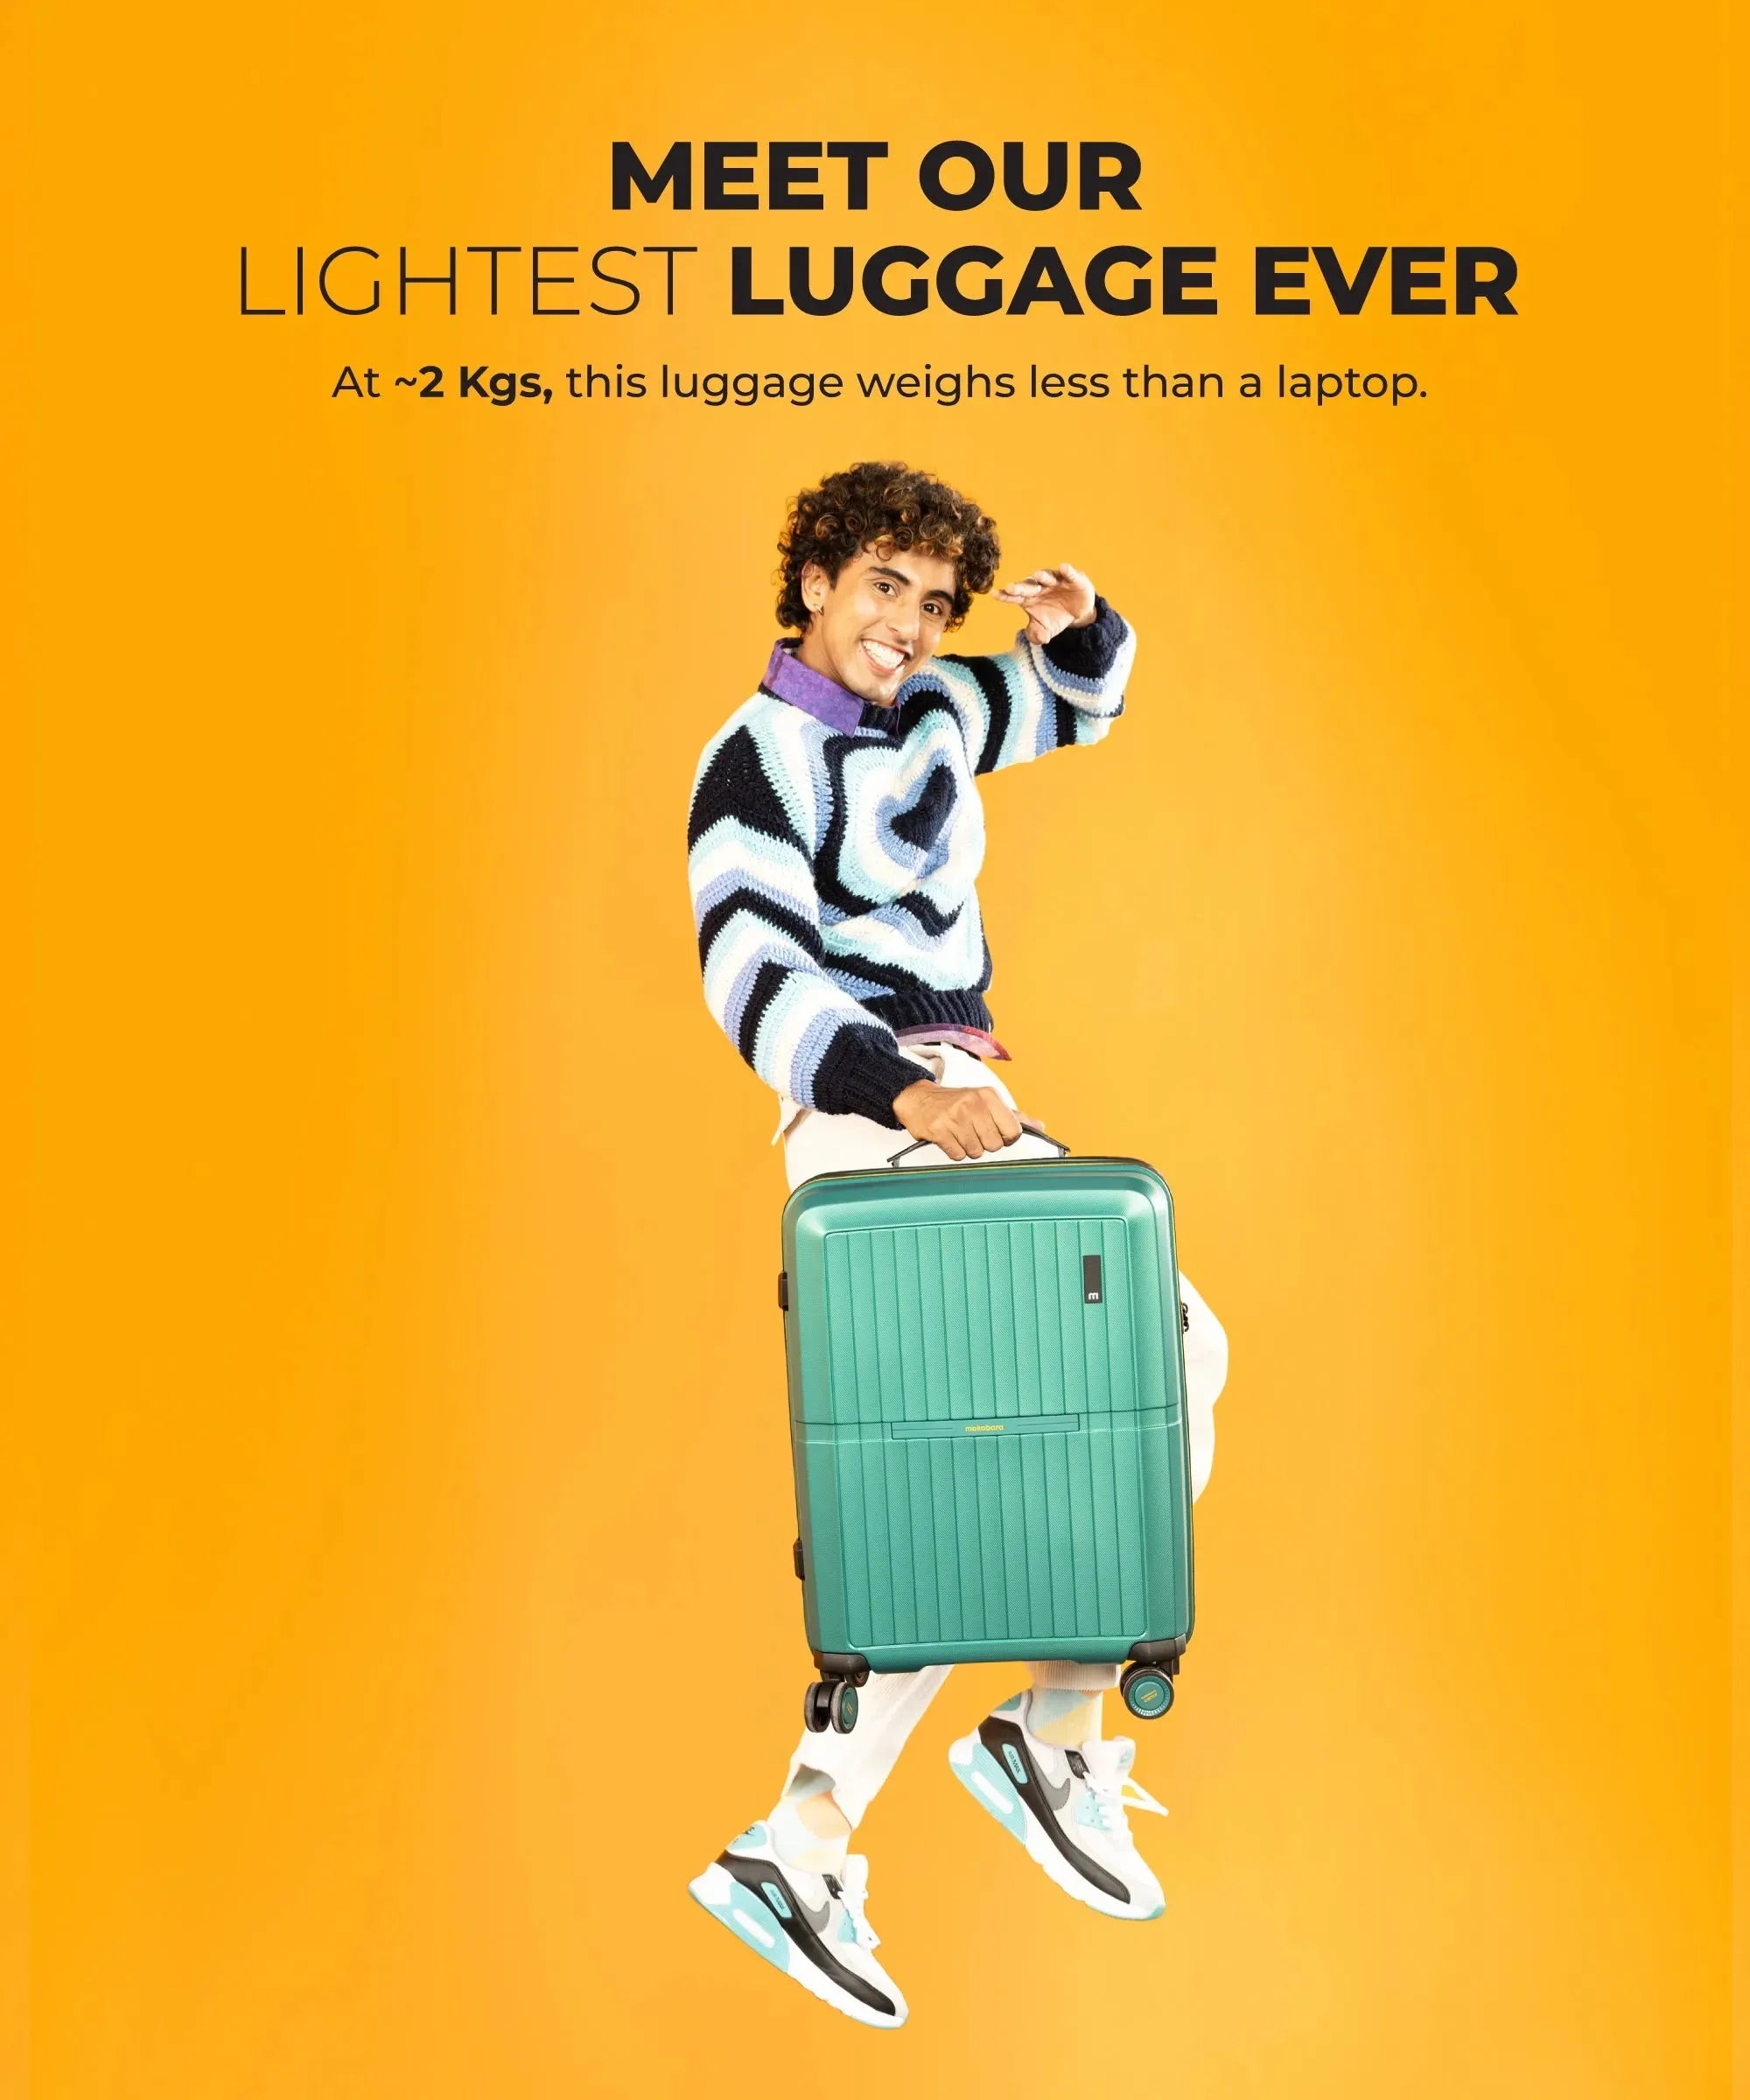 Color_Crypto | The Aviator Luggage